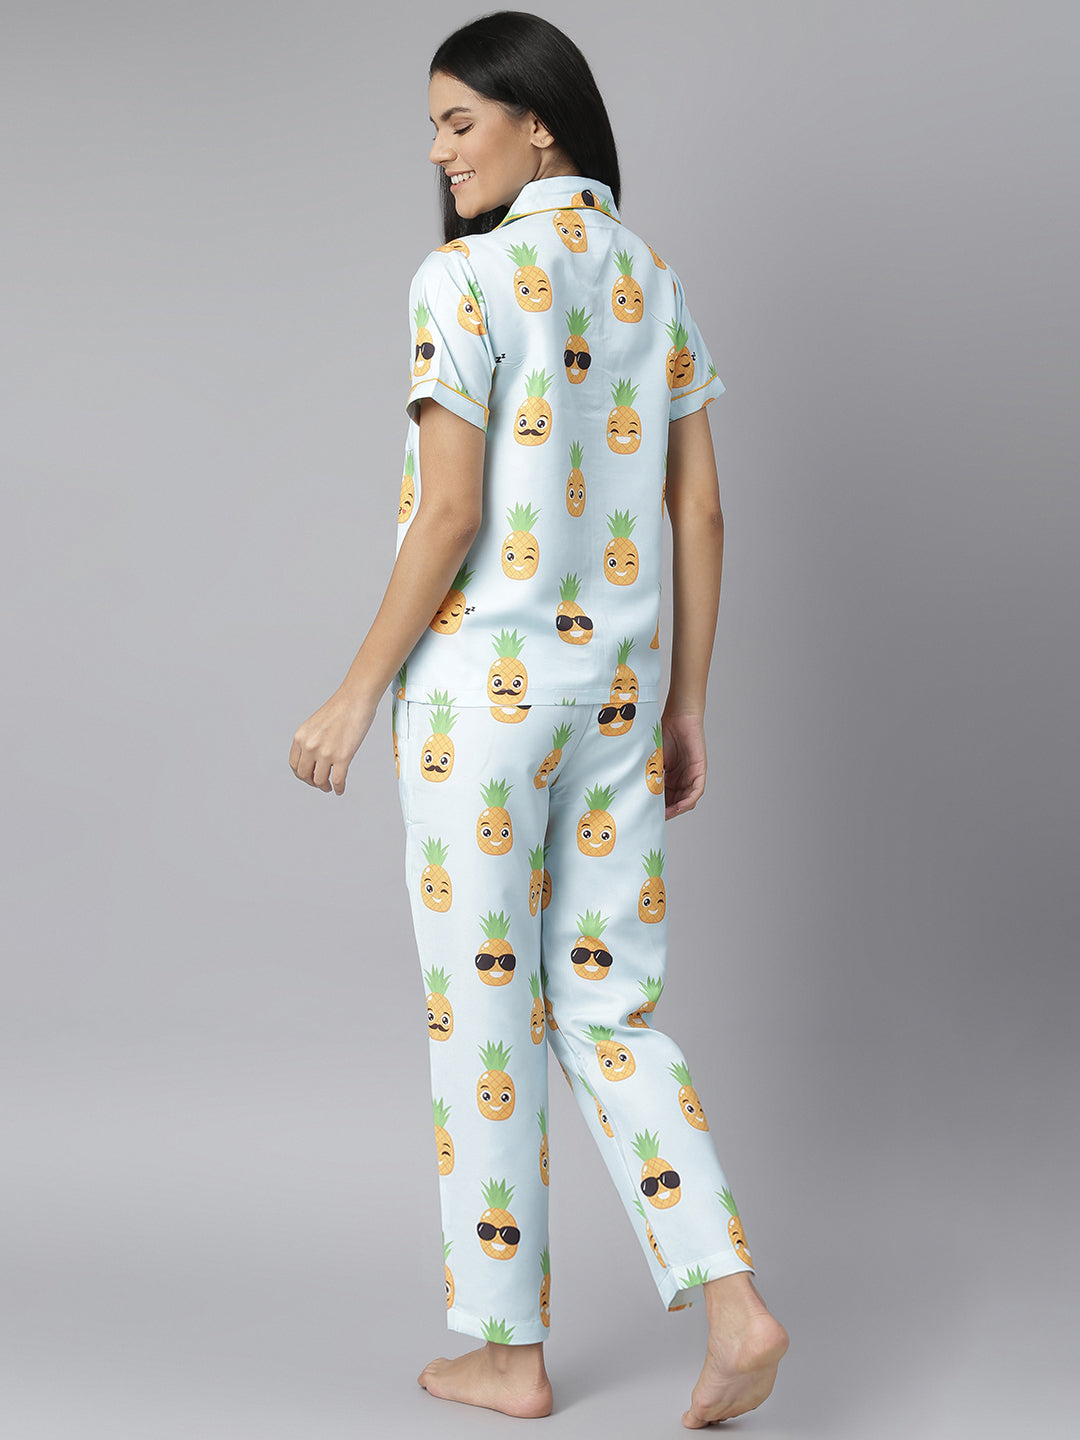 Women's Funny Pineapple Digital Print Night Suit Set